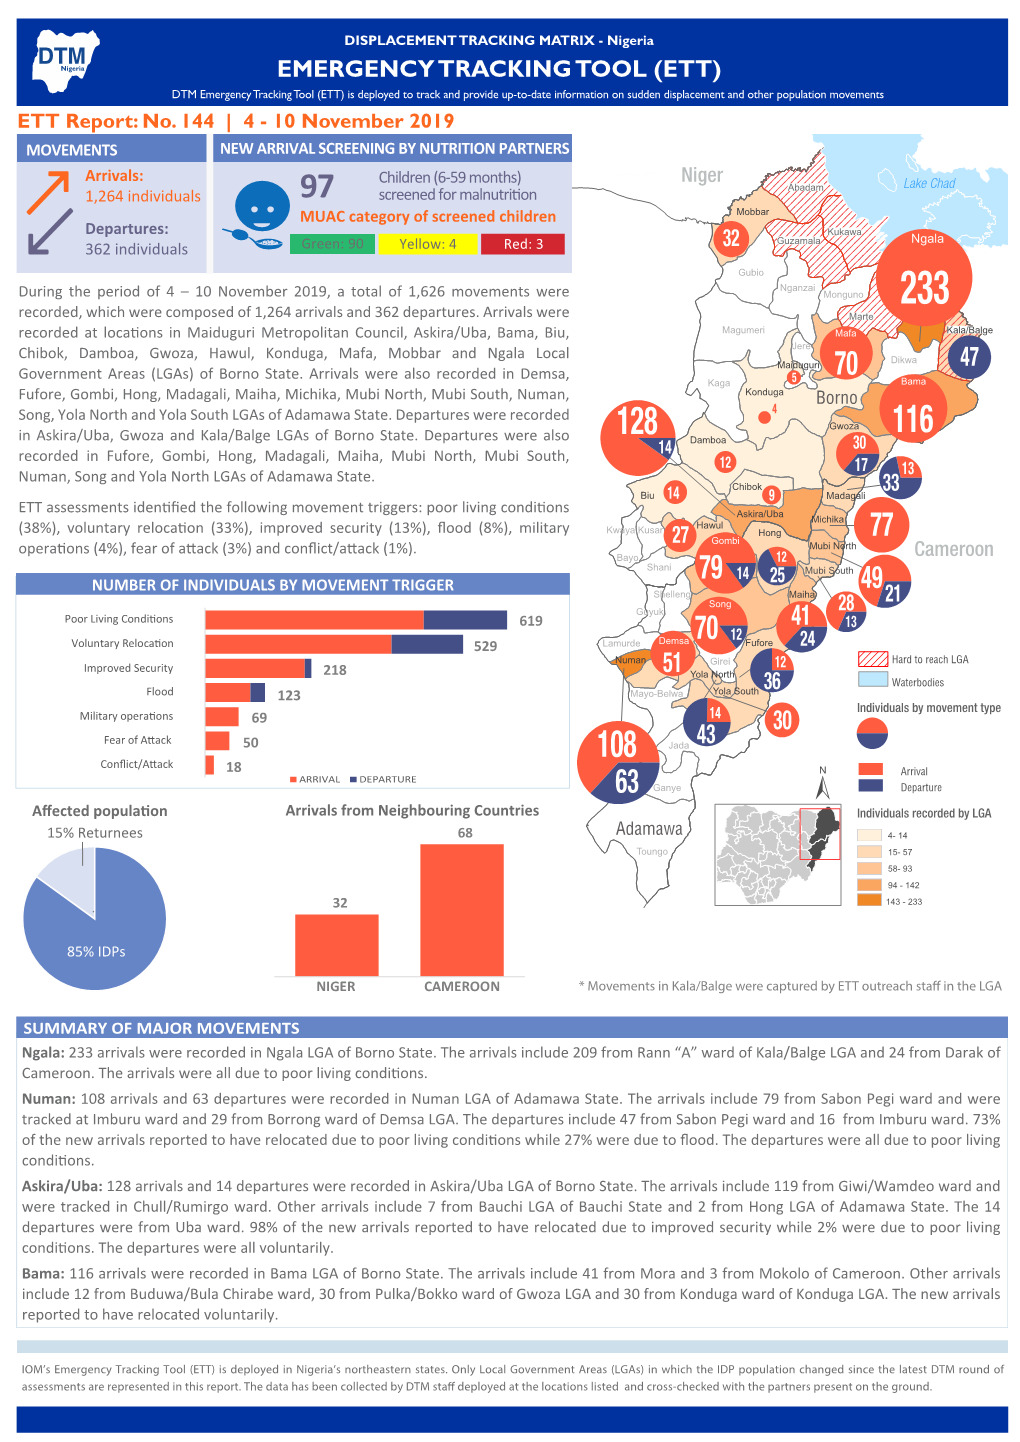 IOM Nigeria DTM Emergency Tracking Tool (ETT) Report No.144 (4